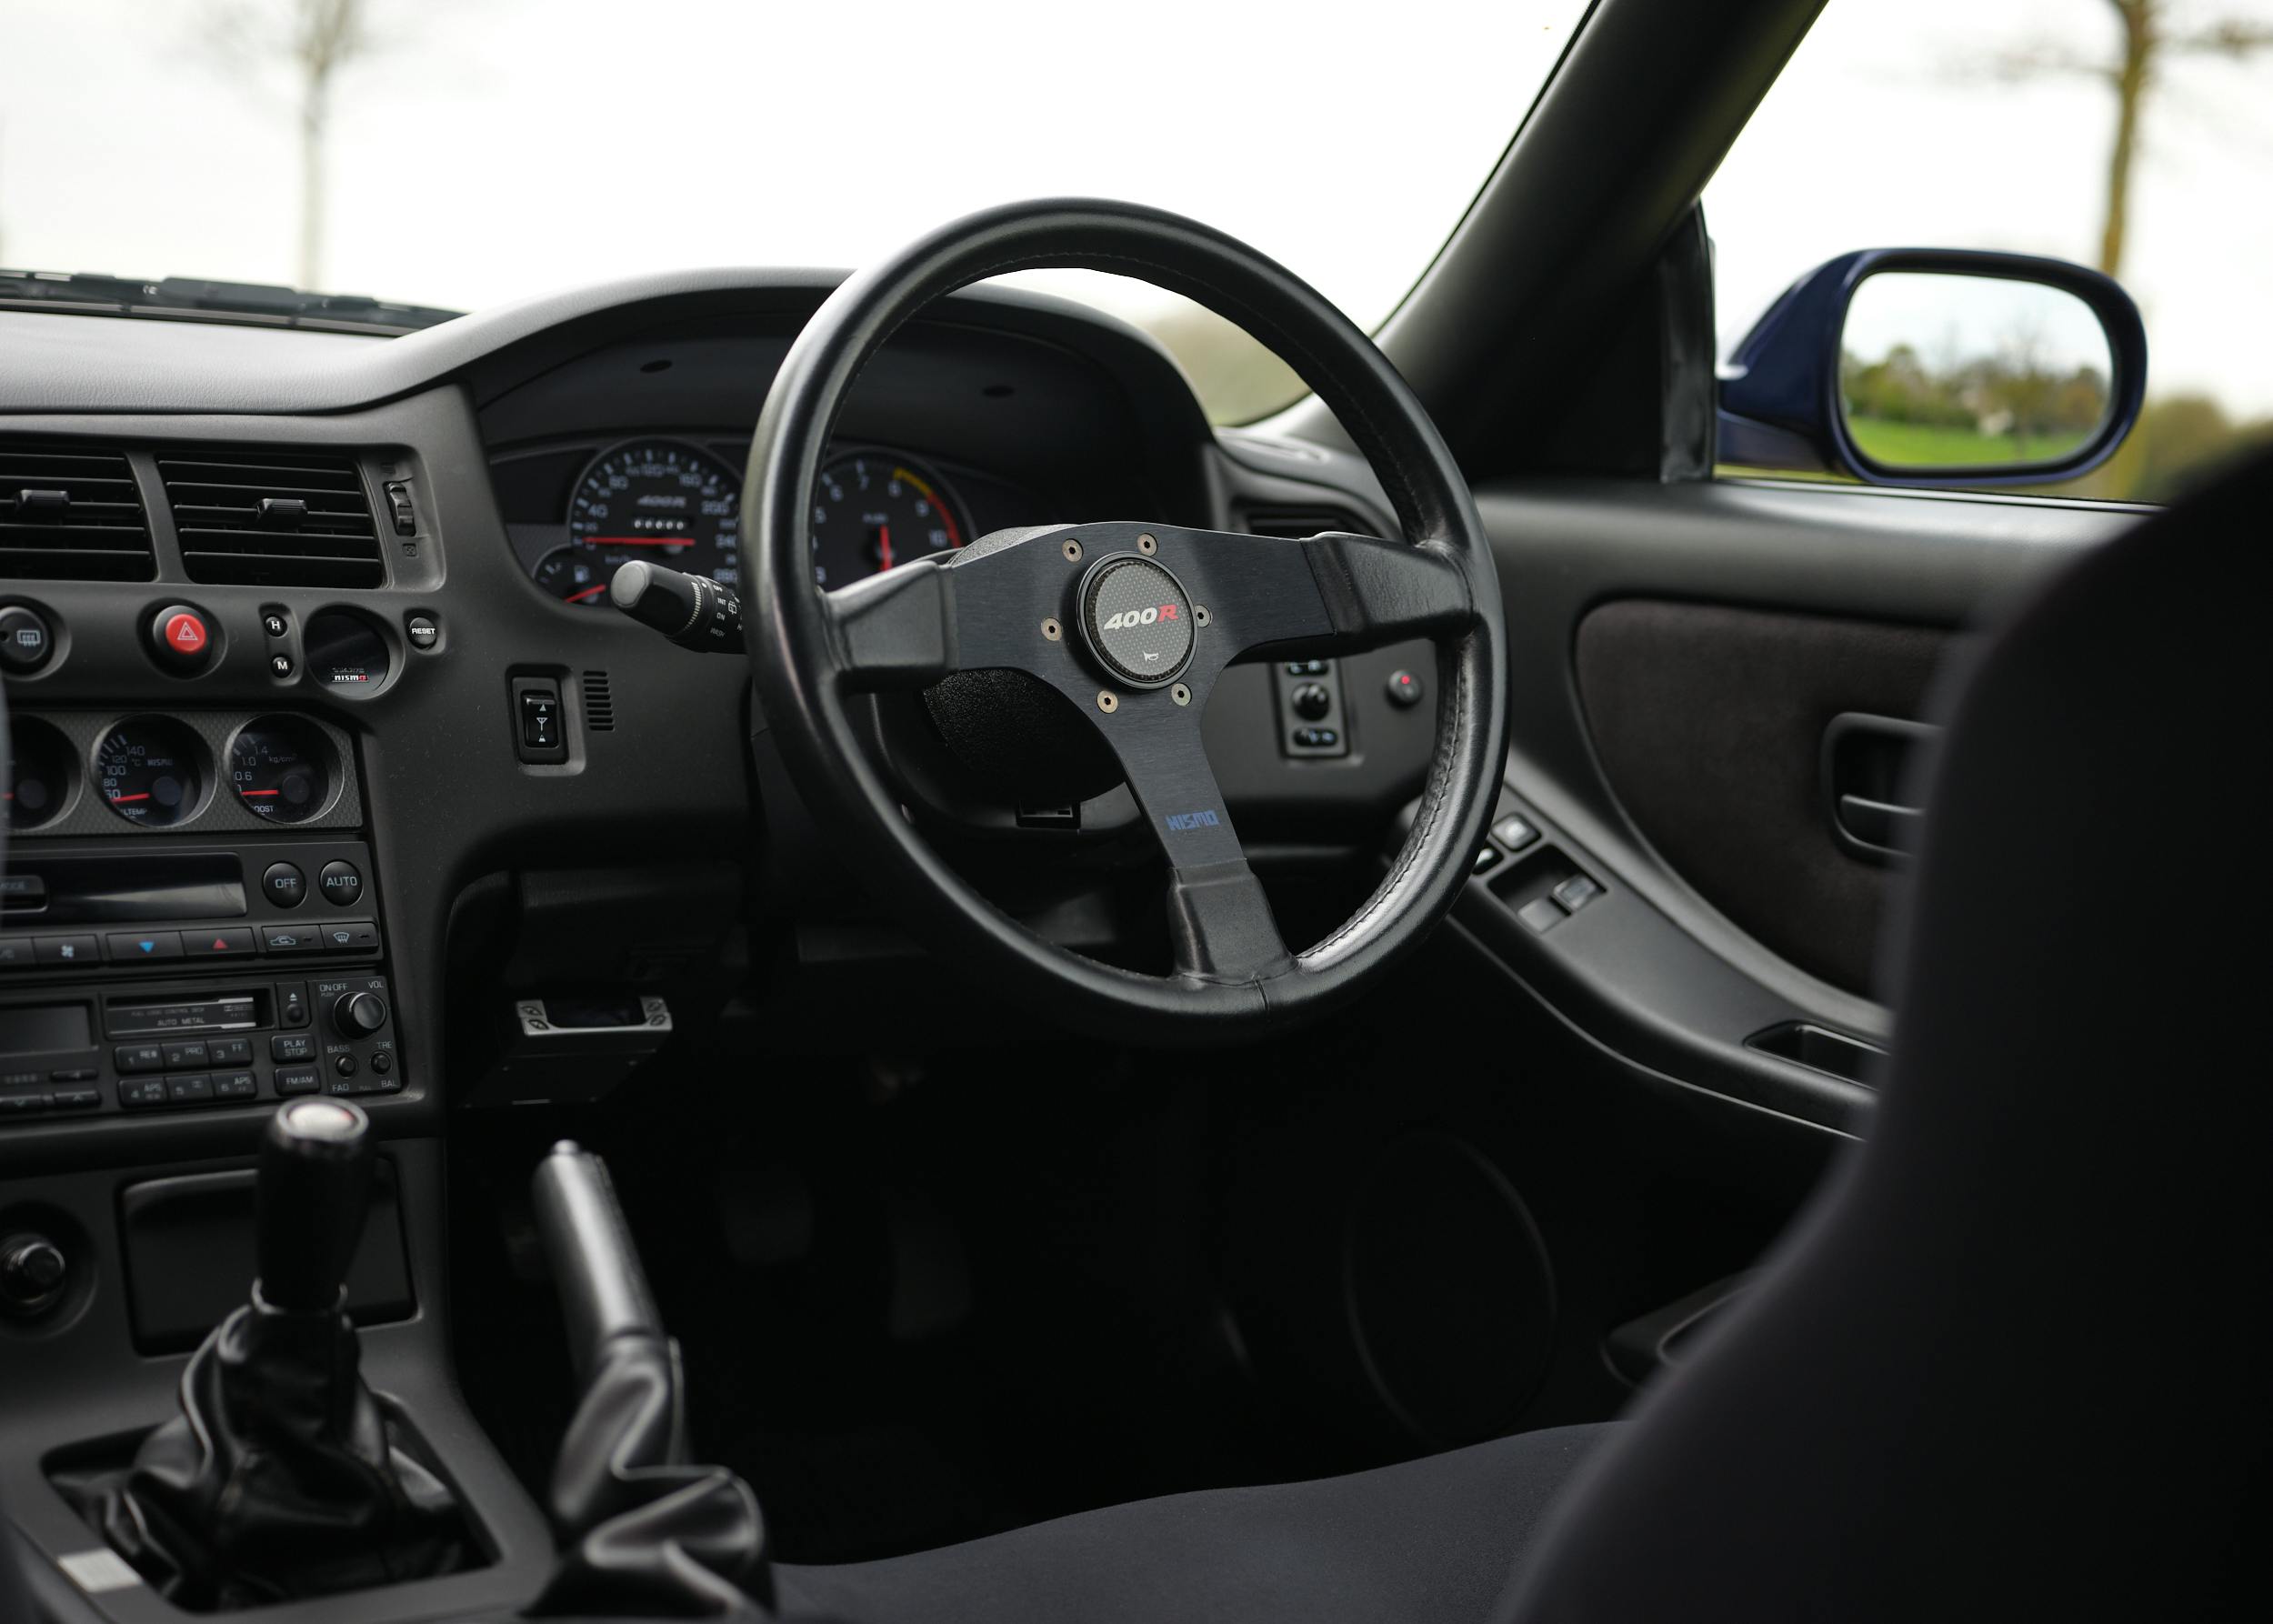 1996 Nissan Skyline R33 GT-R NISMO 400R interior